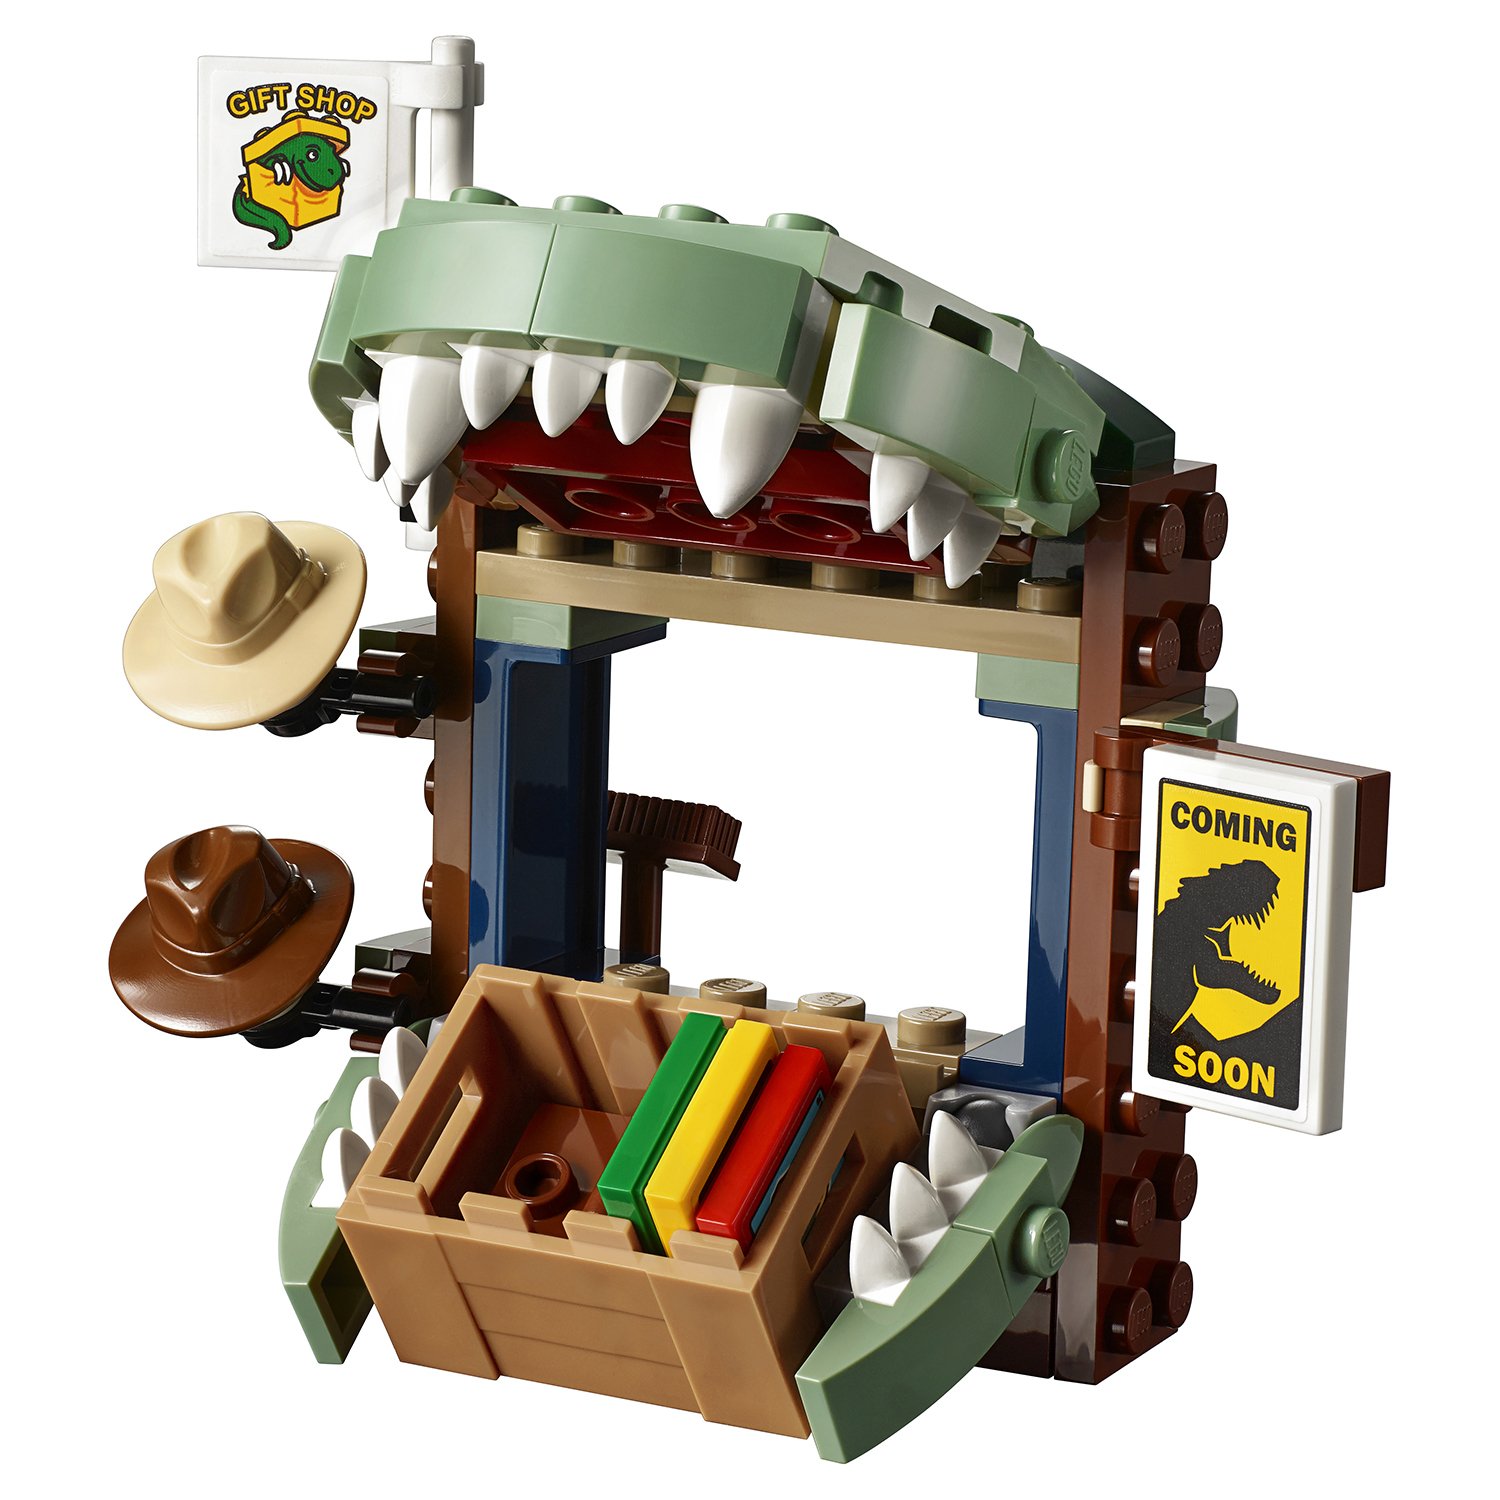 Lego Jurassic World 75934 Побег дилофозавра